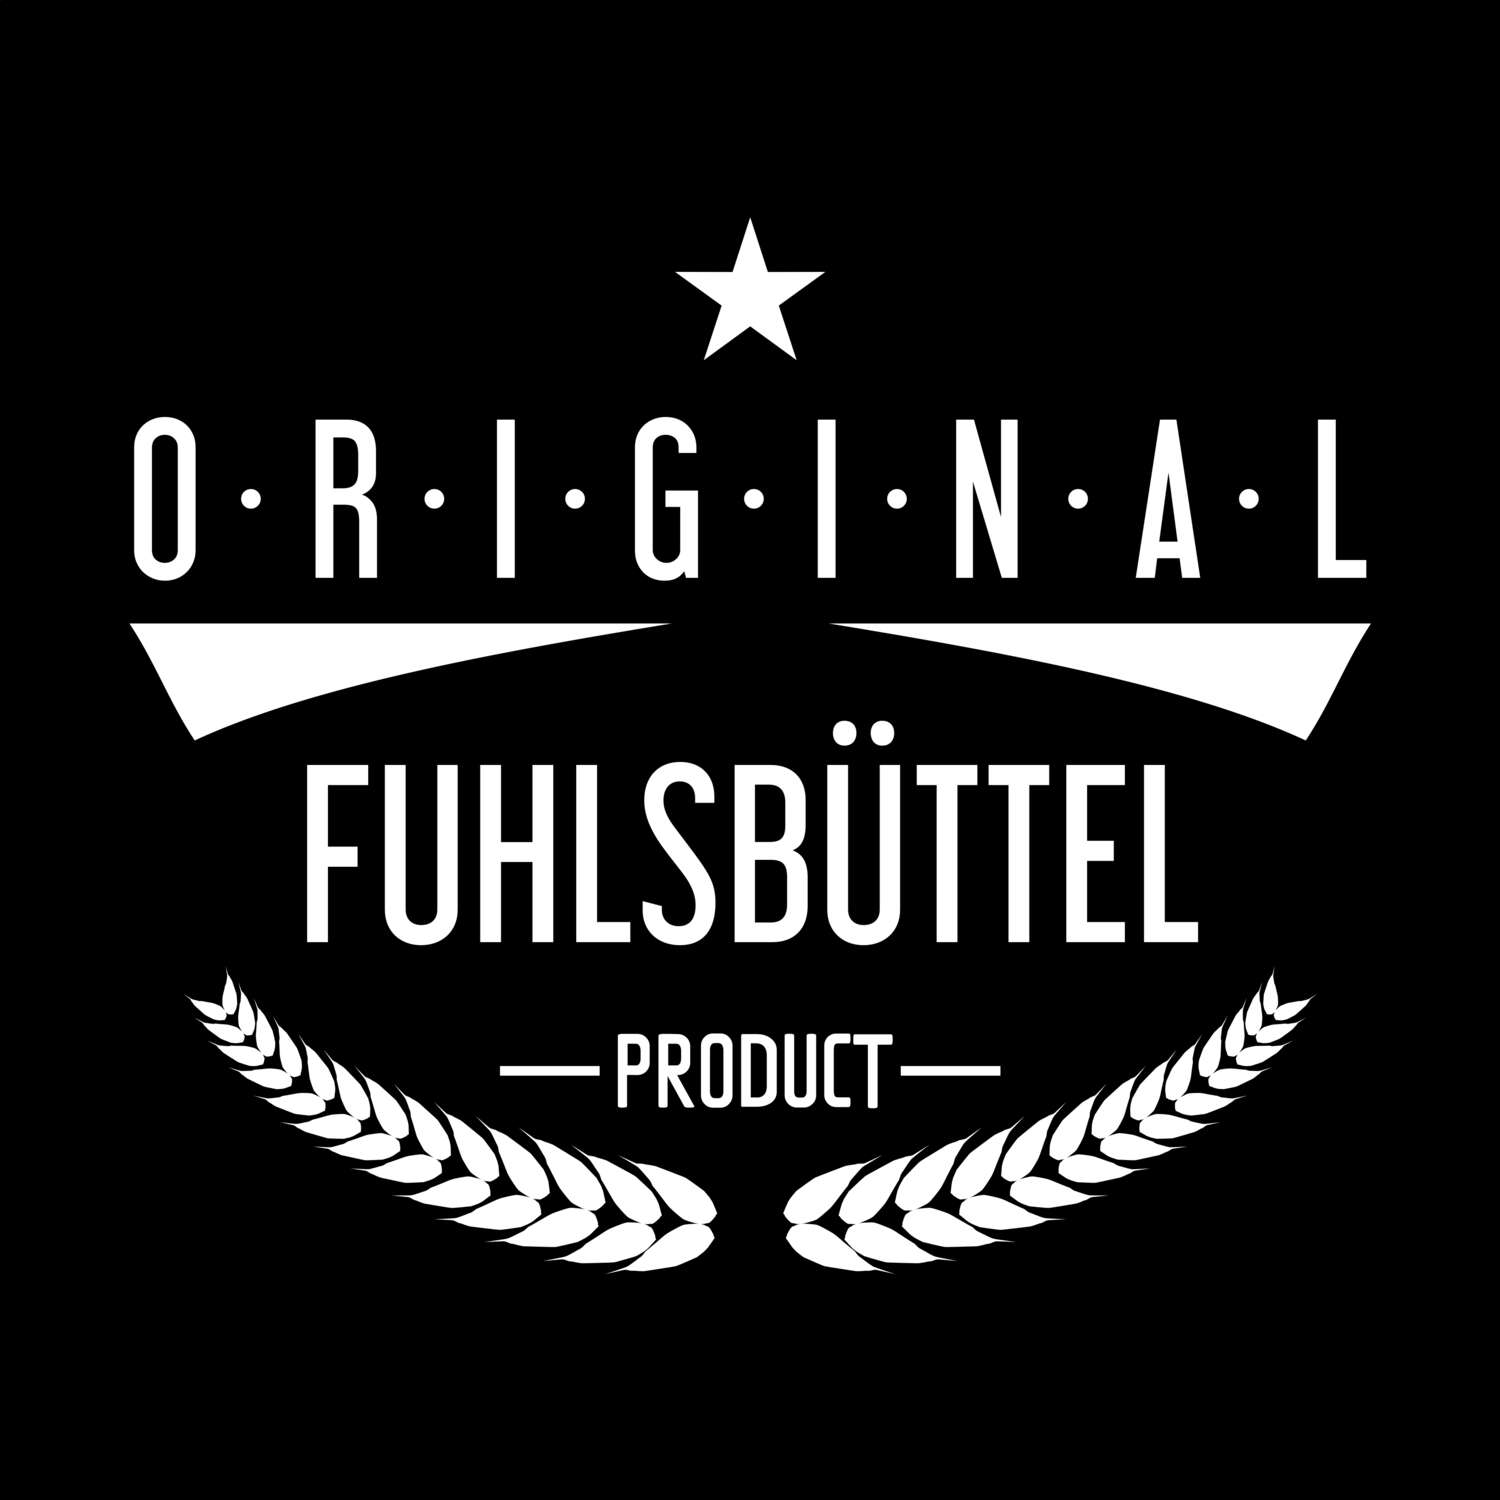 Fuhlsbüttel T-Shirt »Original Product«